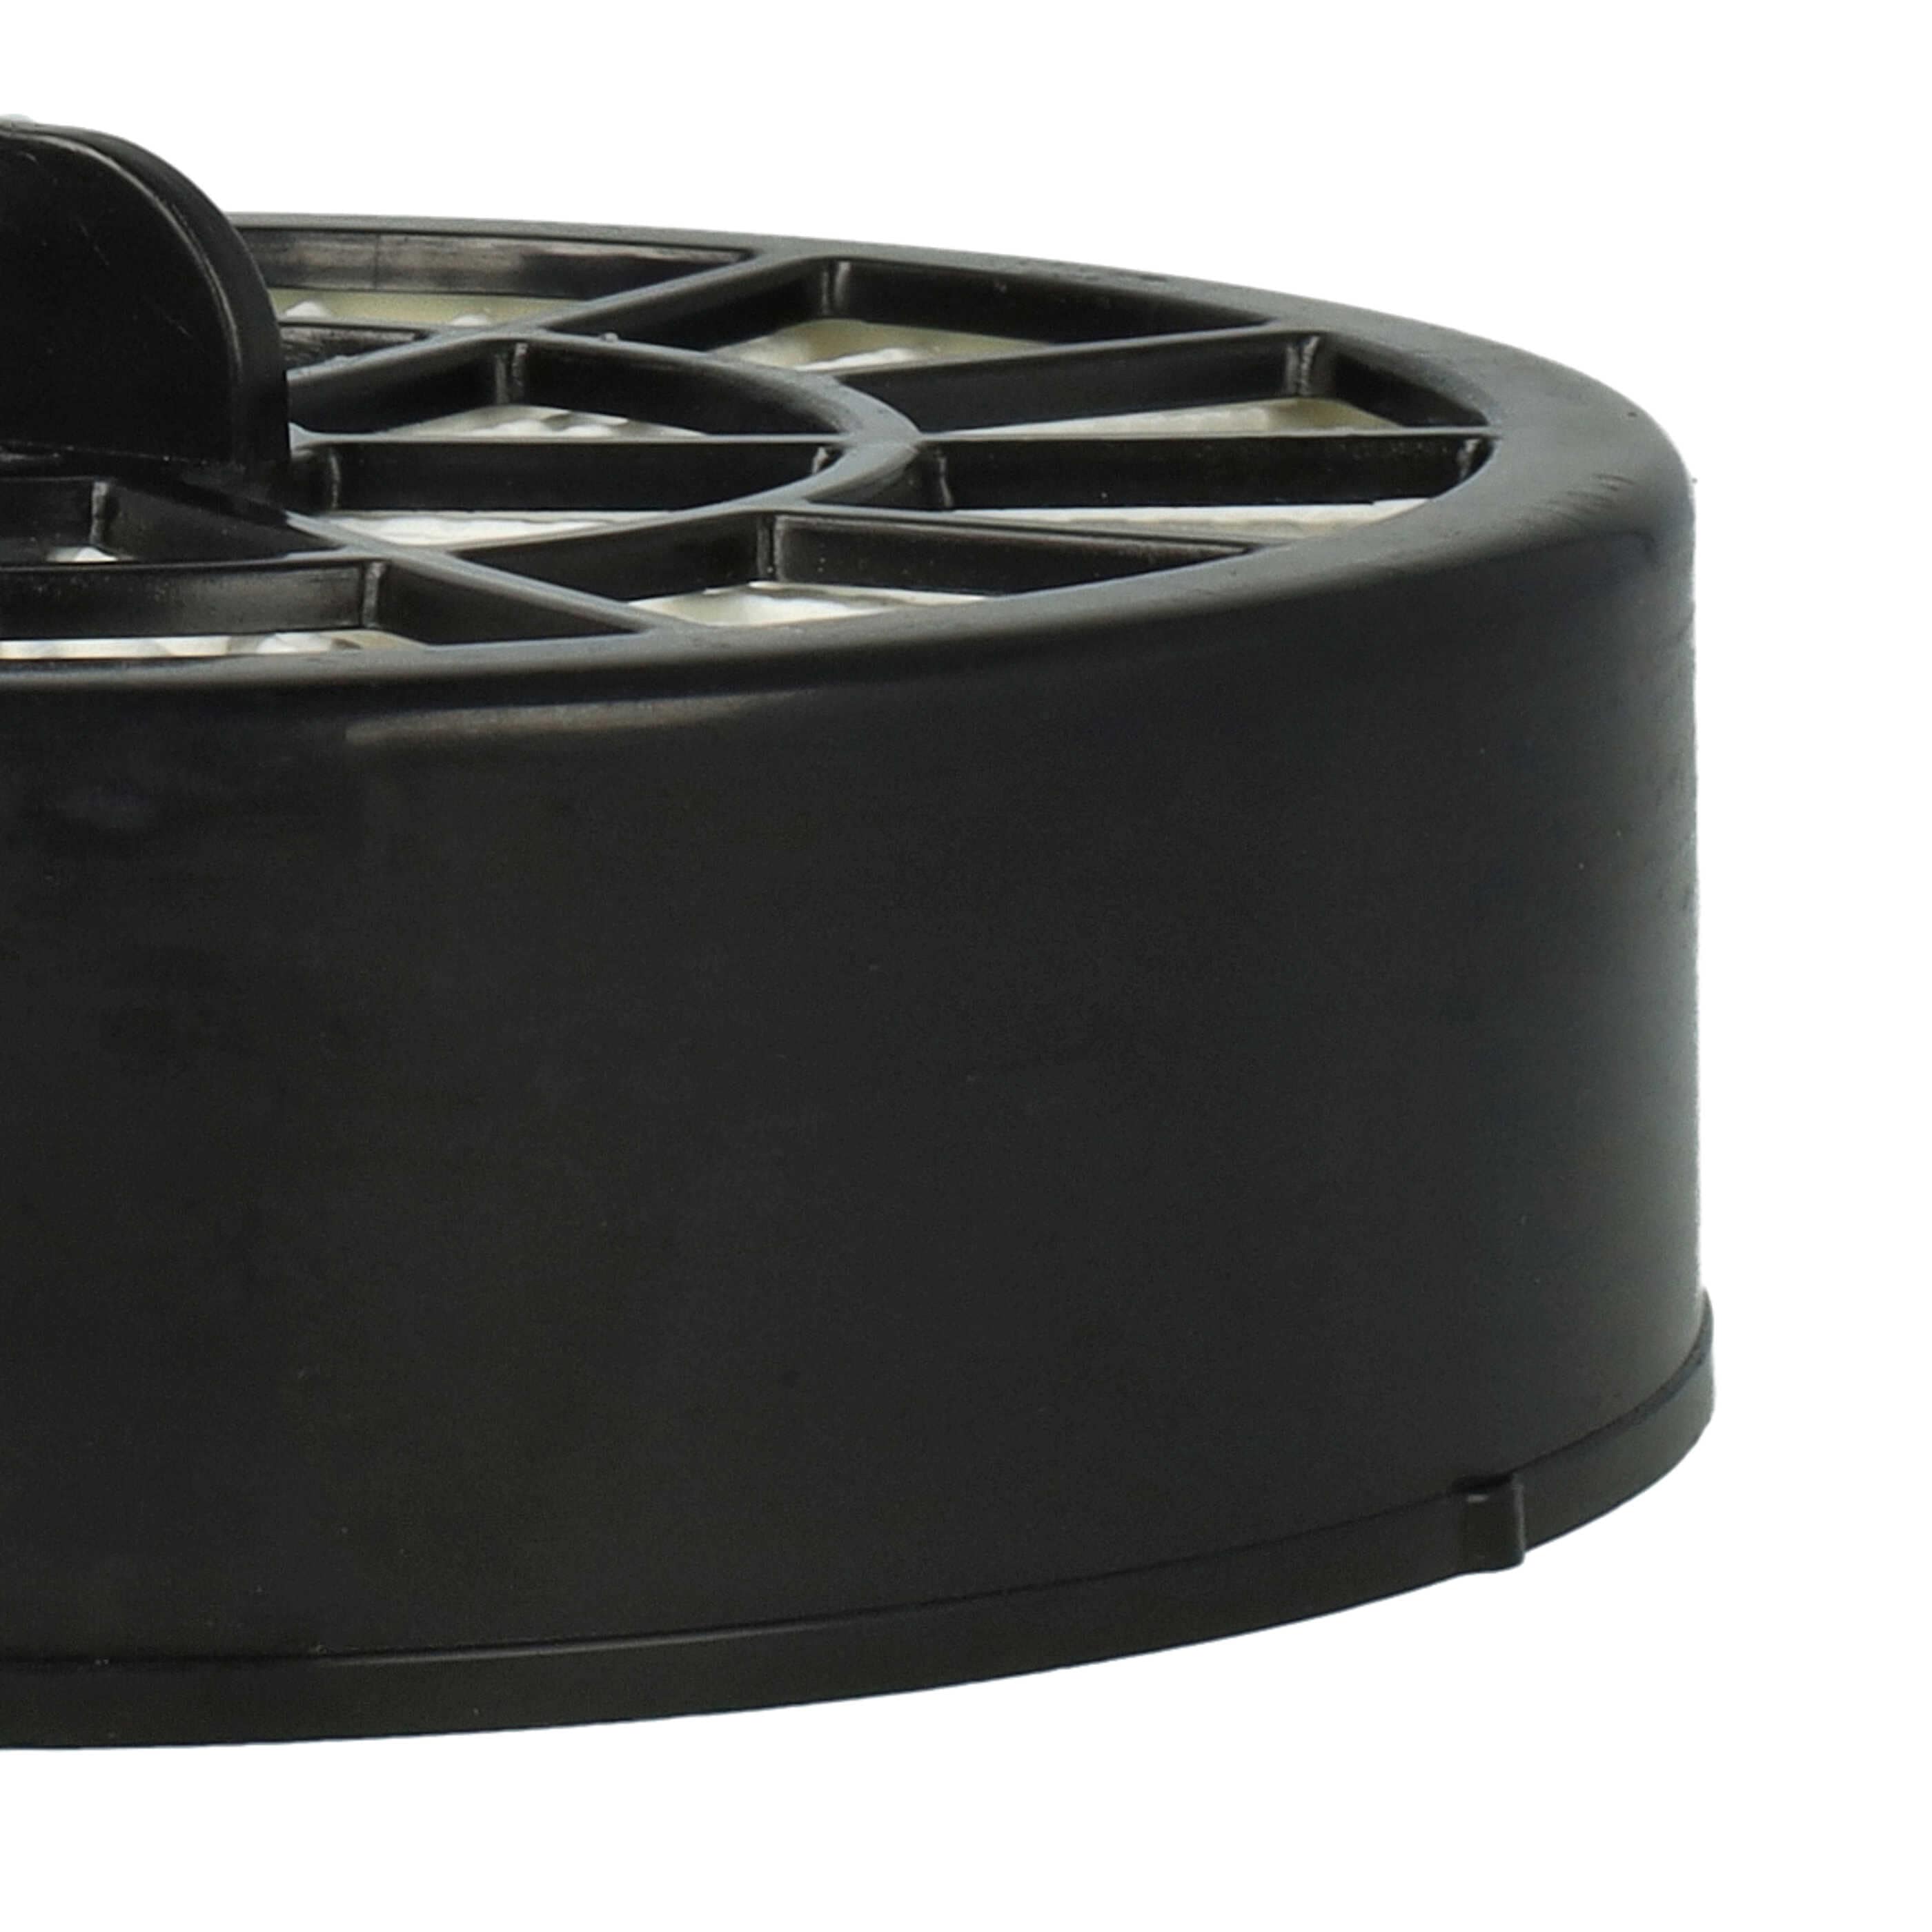 1x HEPA filter replaces Ariete AT5166054100 for Ariete Vacuum Cleaner